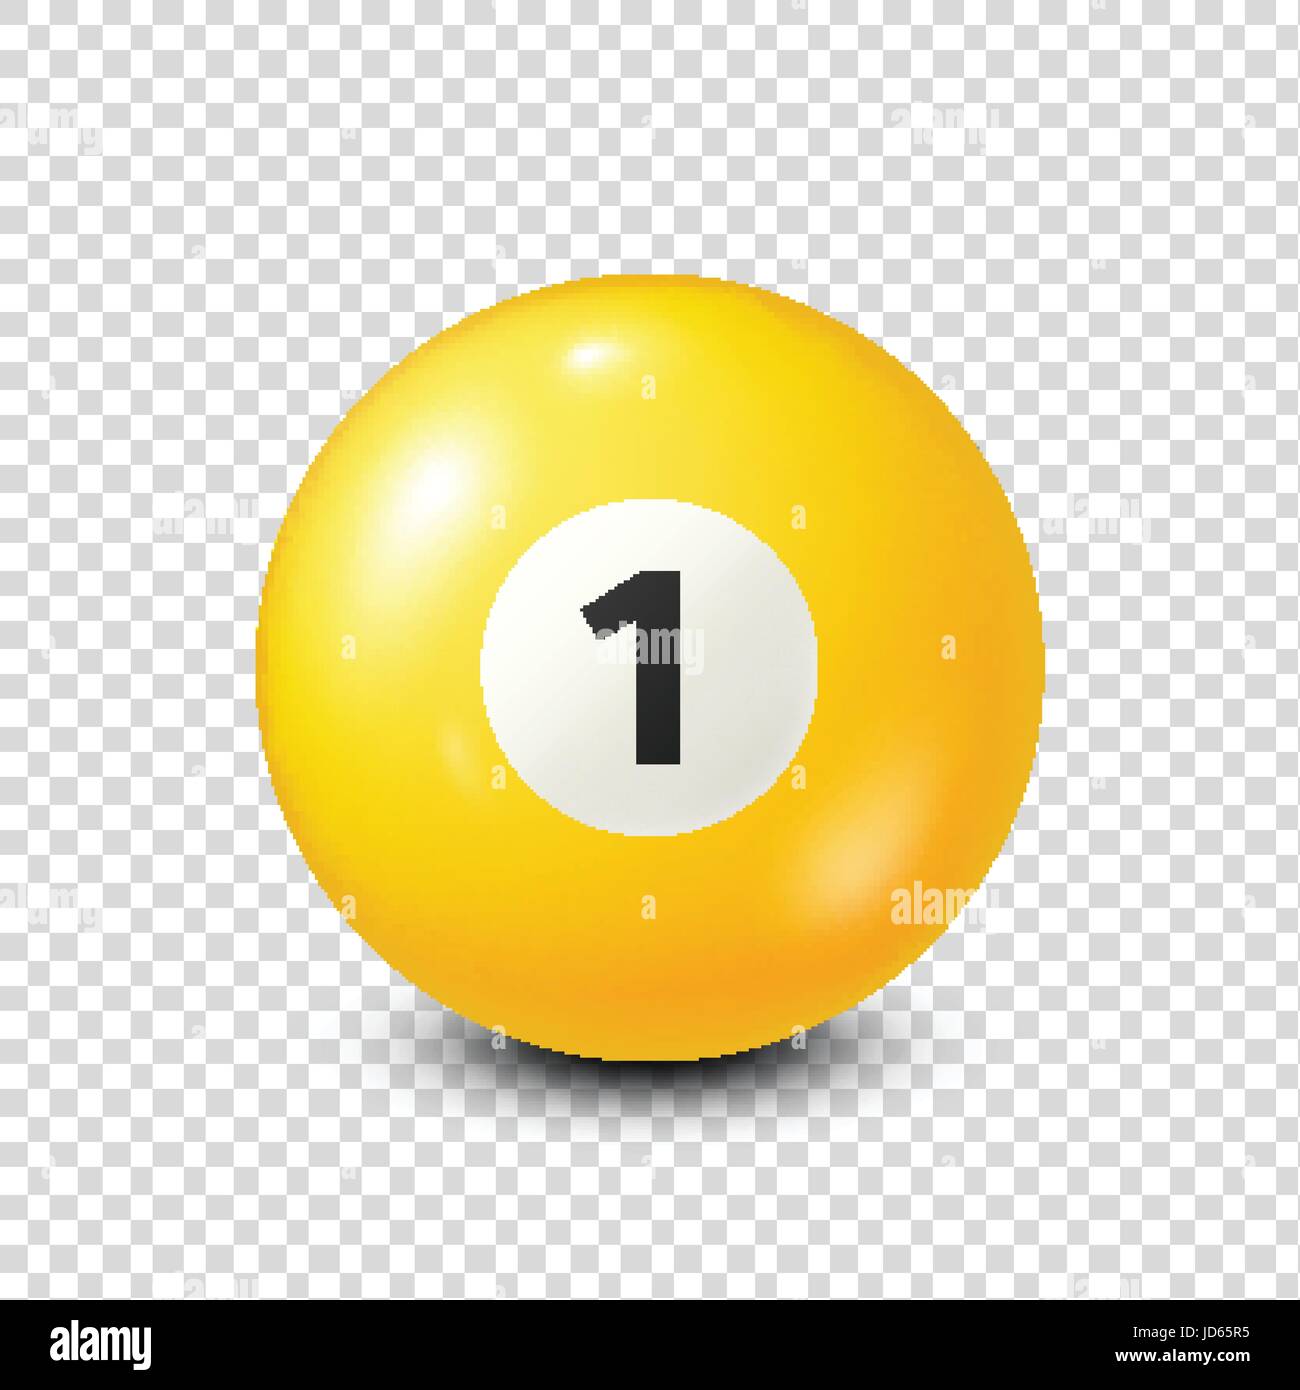 Billard pool ball jaune avec le numéro 1.Snooker. Fond transparent.Vector  illustration Image Vectorielle Stock - Alamy